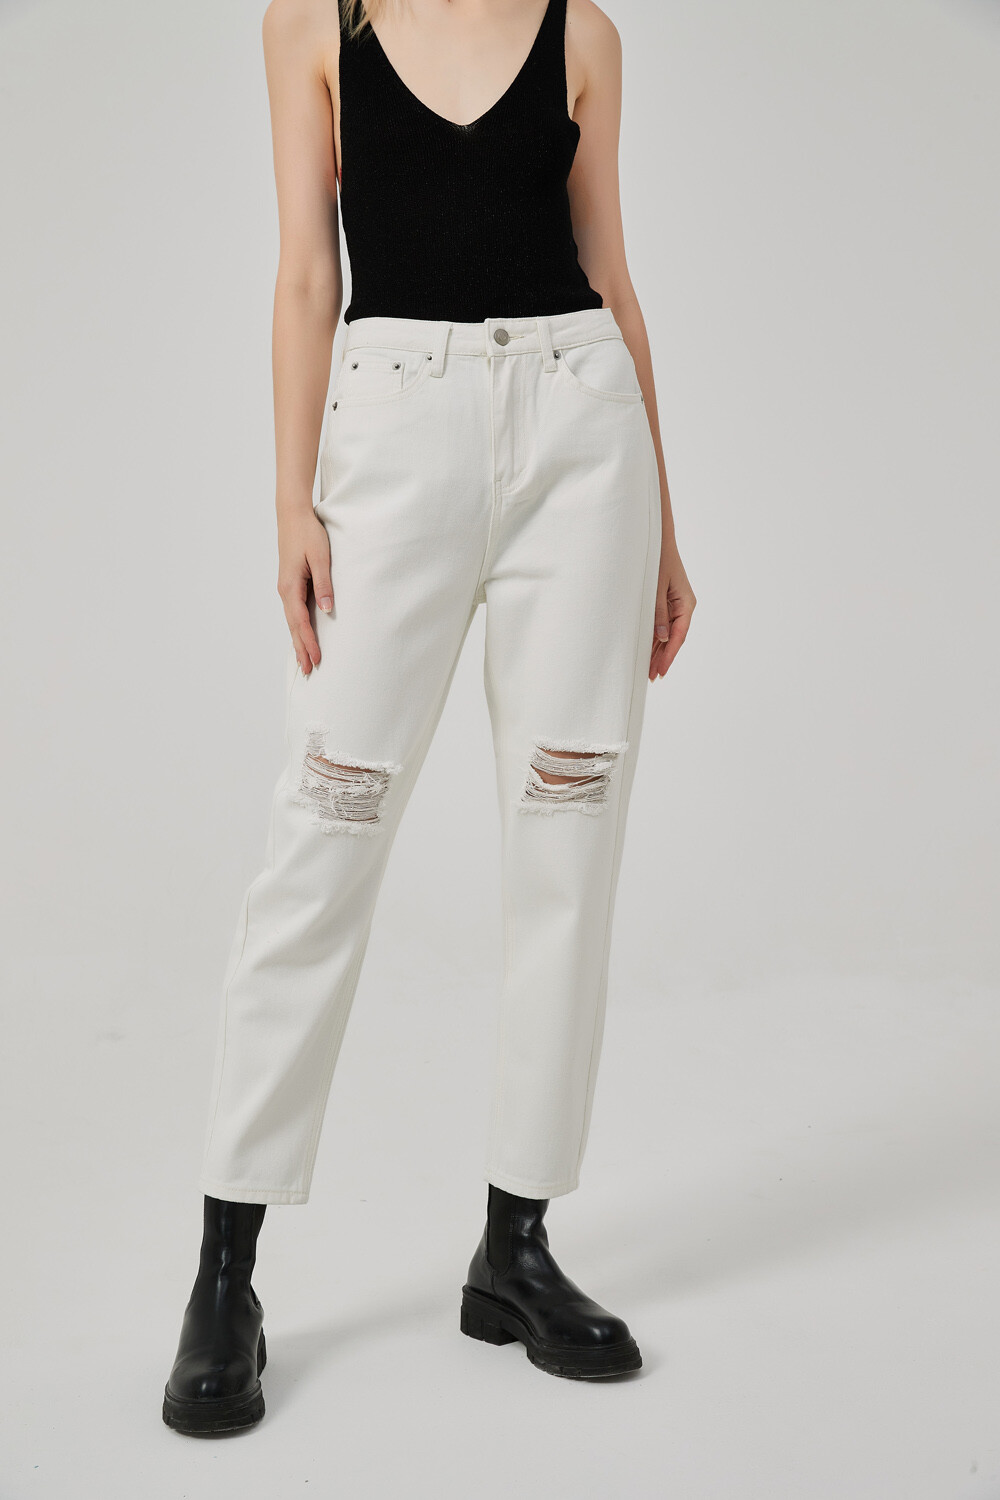 Pantalon Fajardo Marfil / Off White